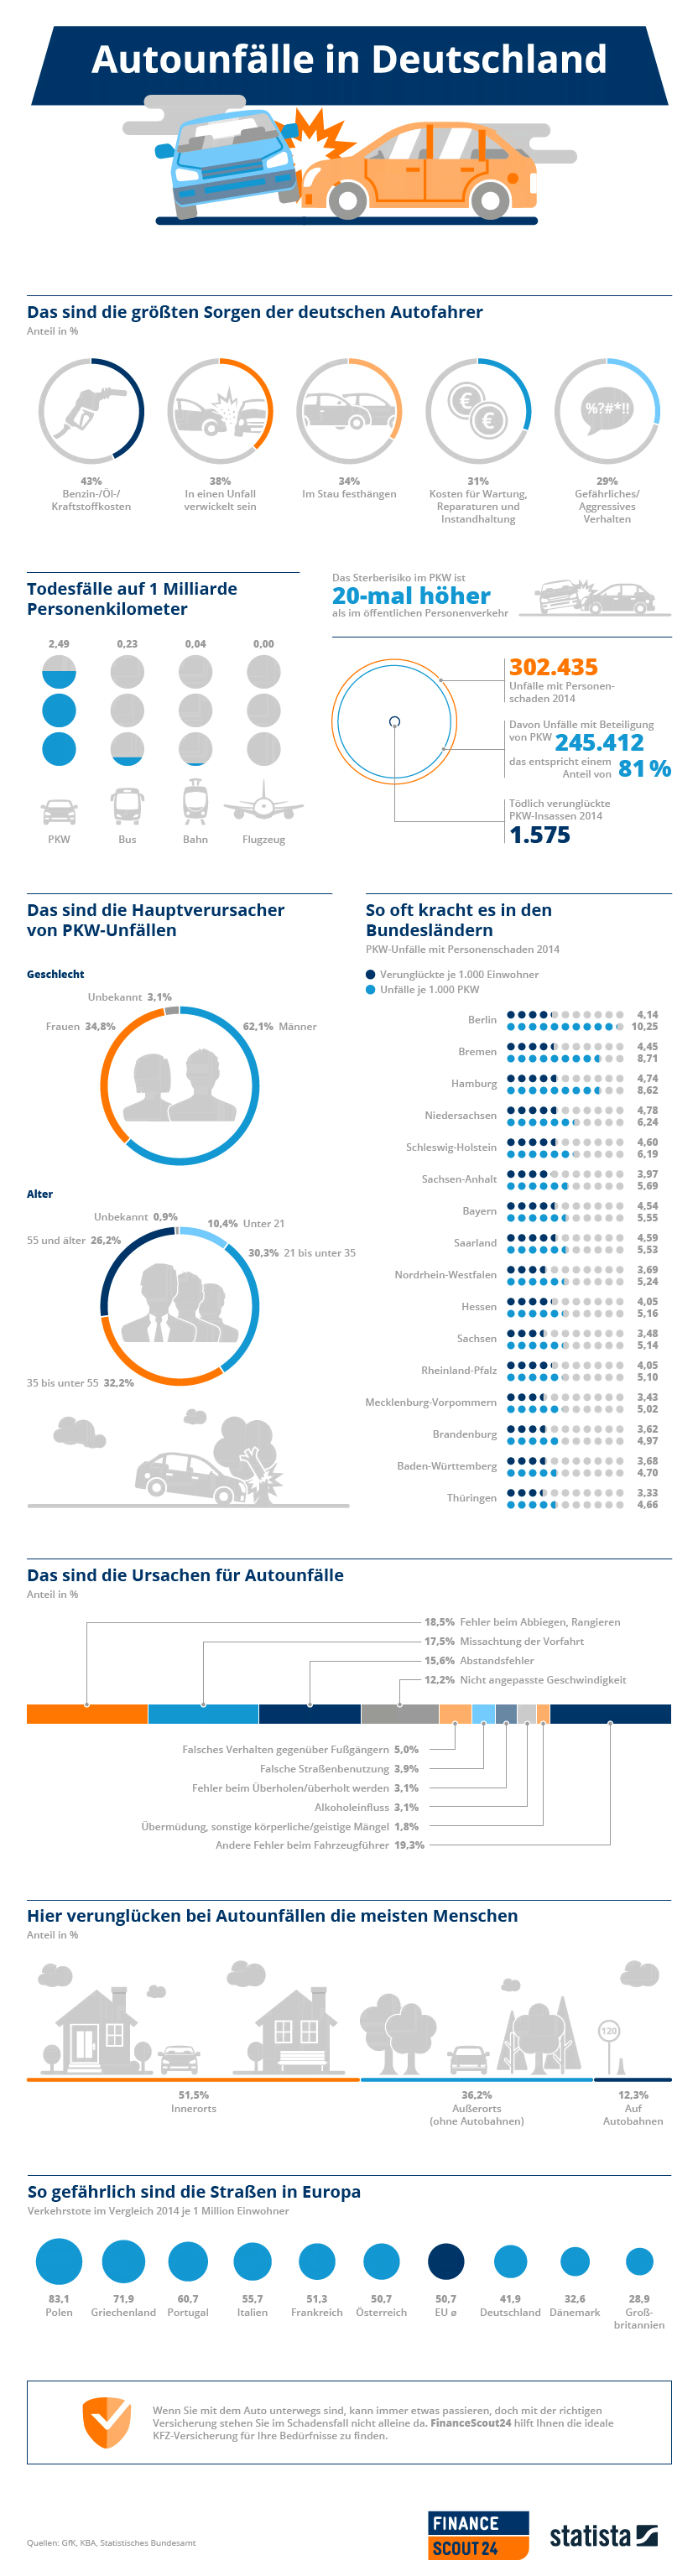 FinanceScout24 Infografik: Autounfälle in Deutschland